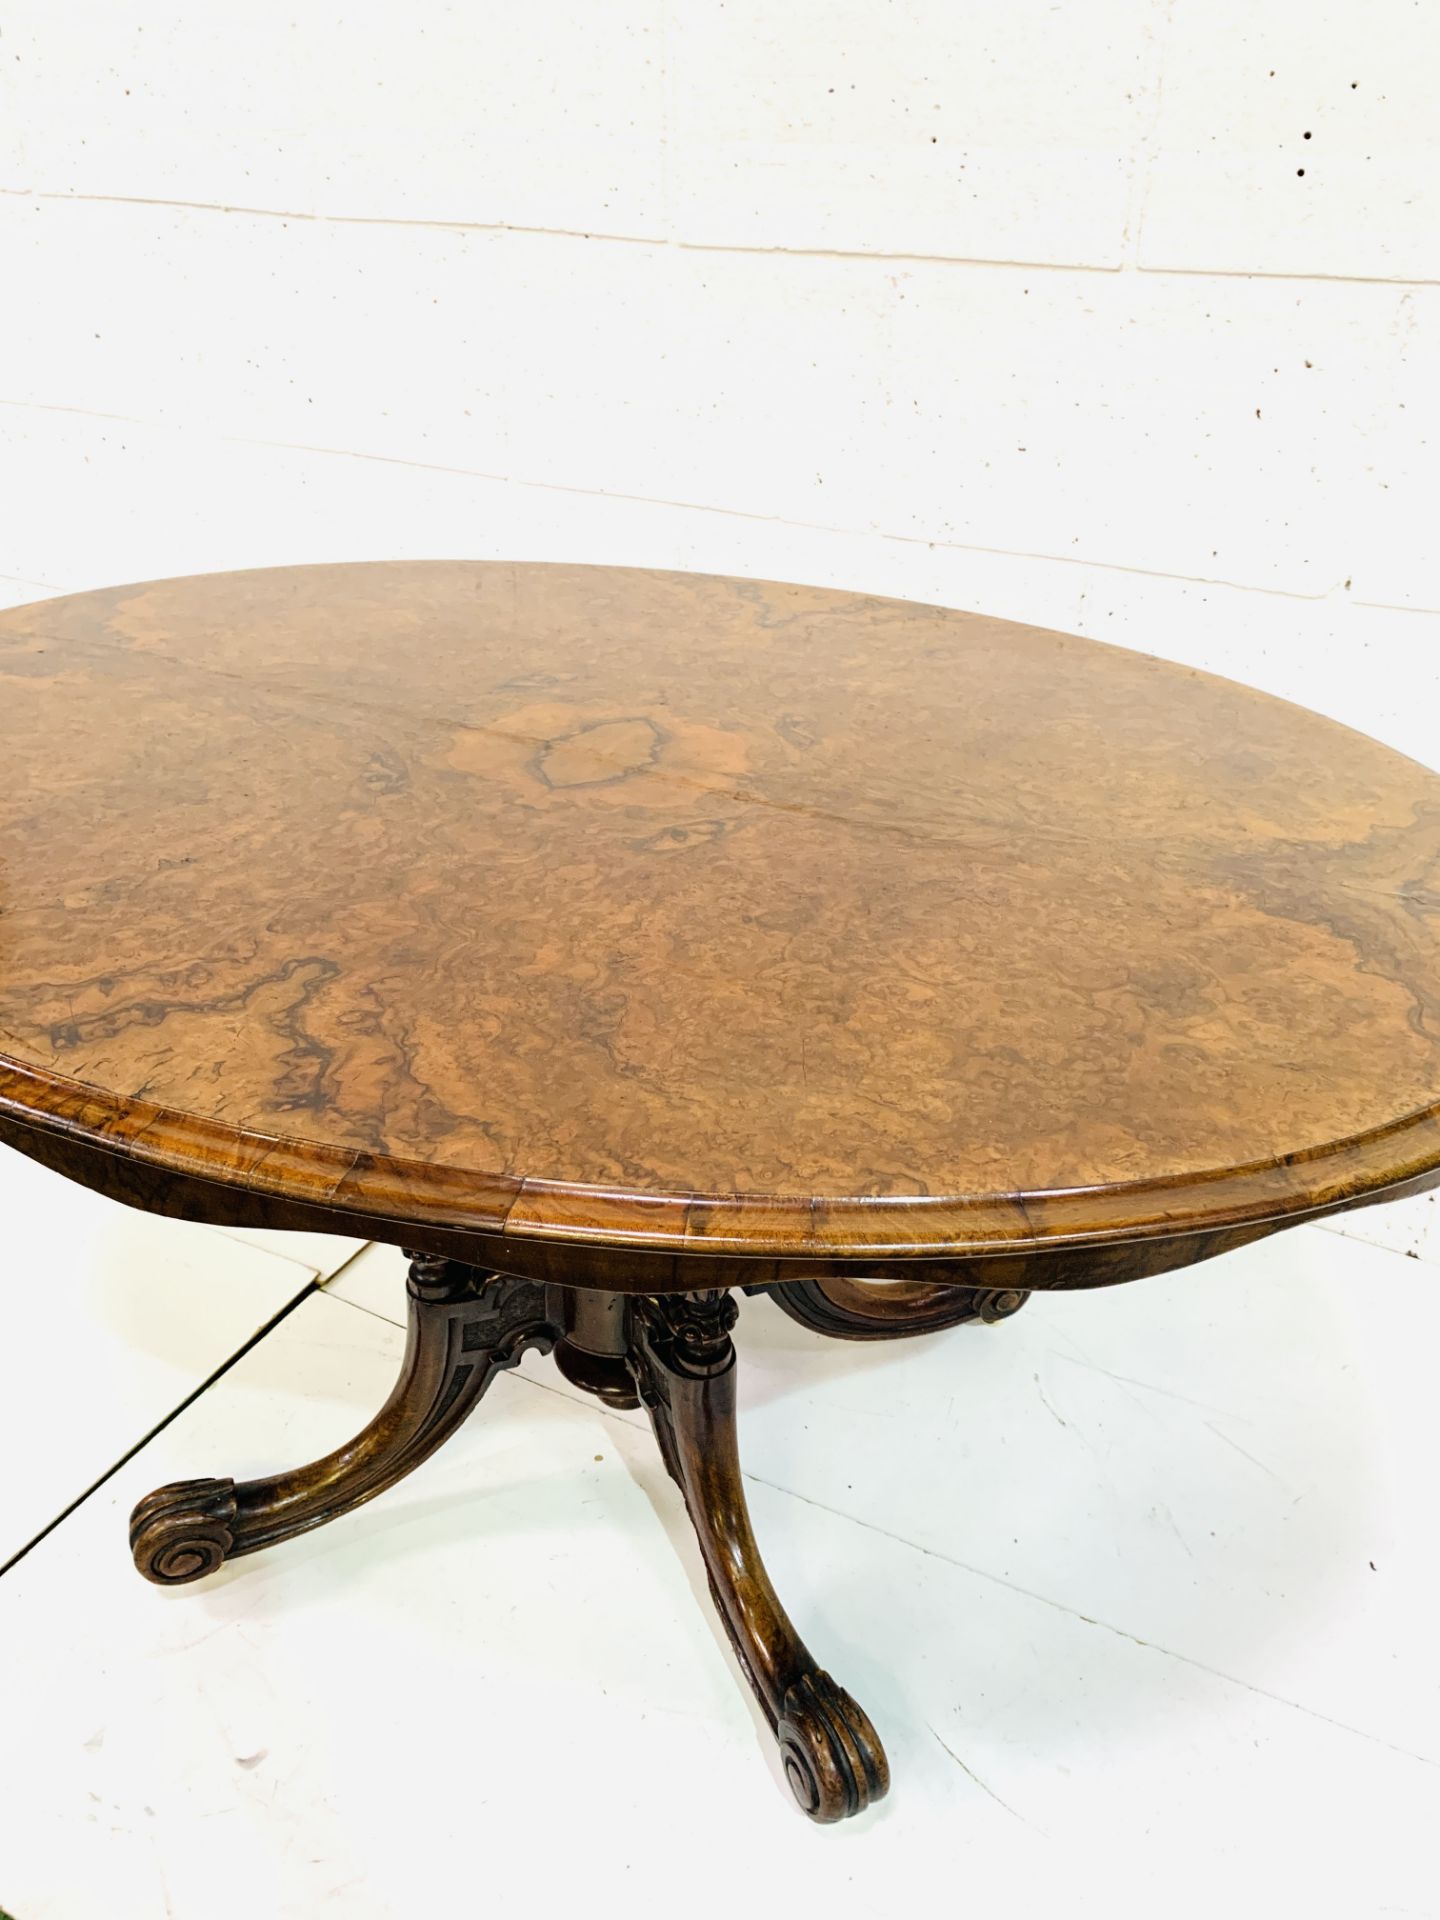 Walnut oval tilt top table - Image 11 of 11